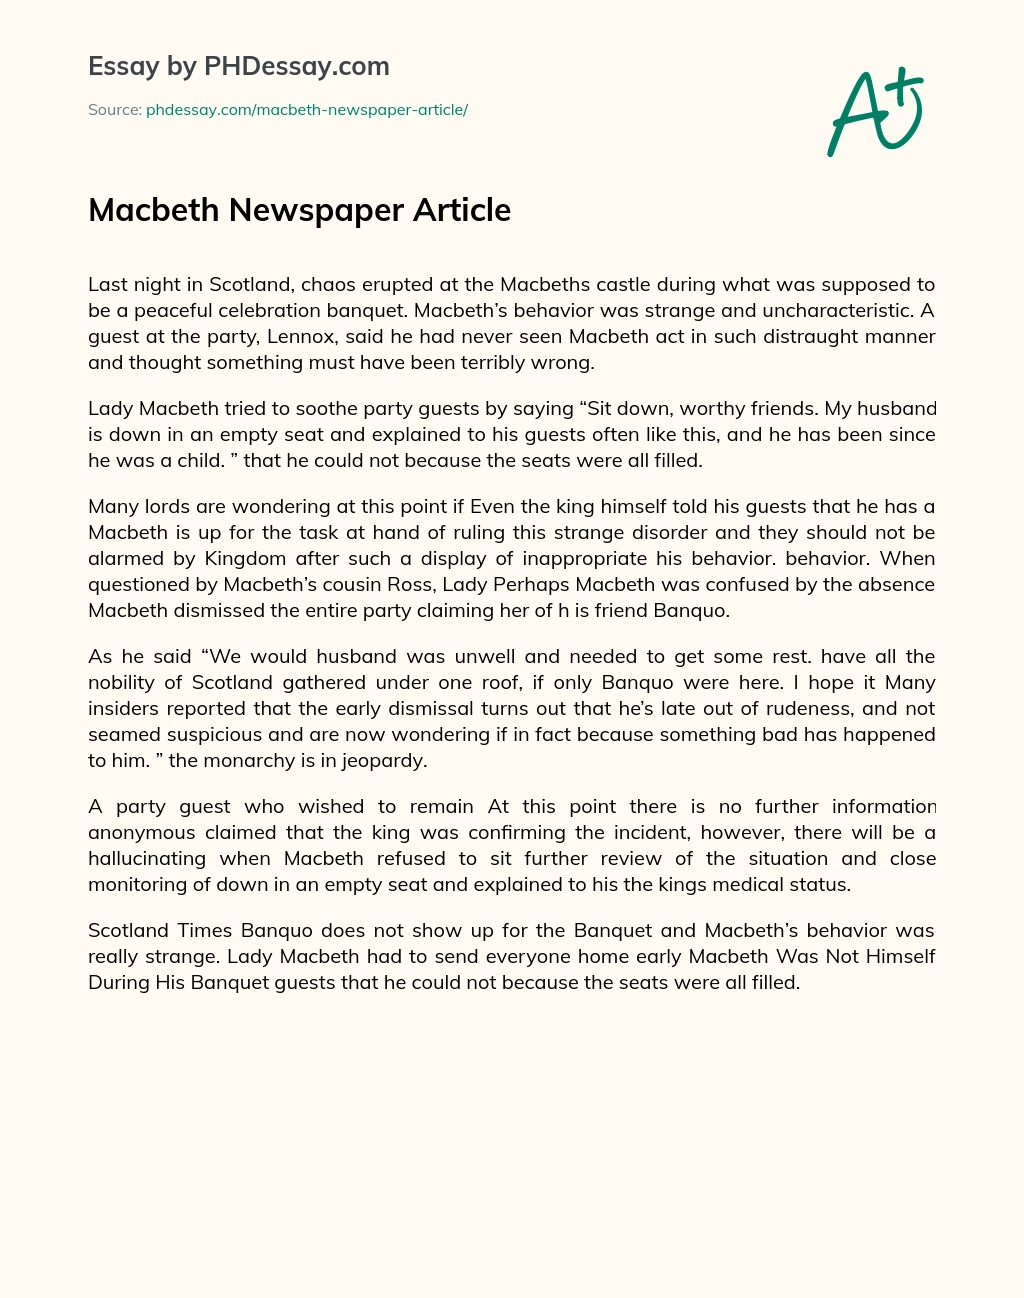 macbeth newspaper article assignment